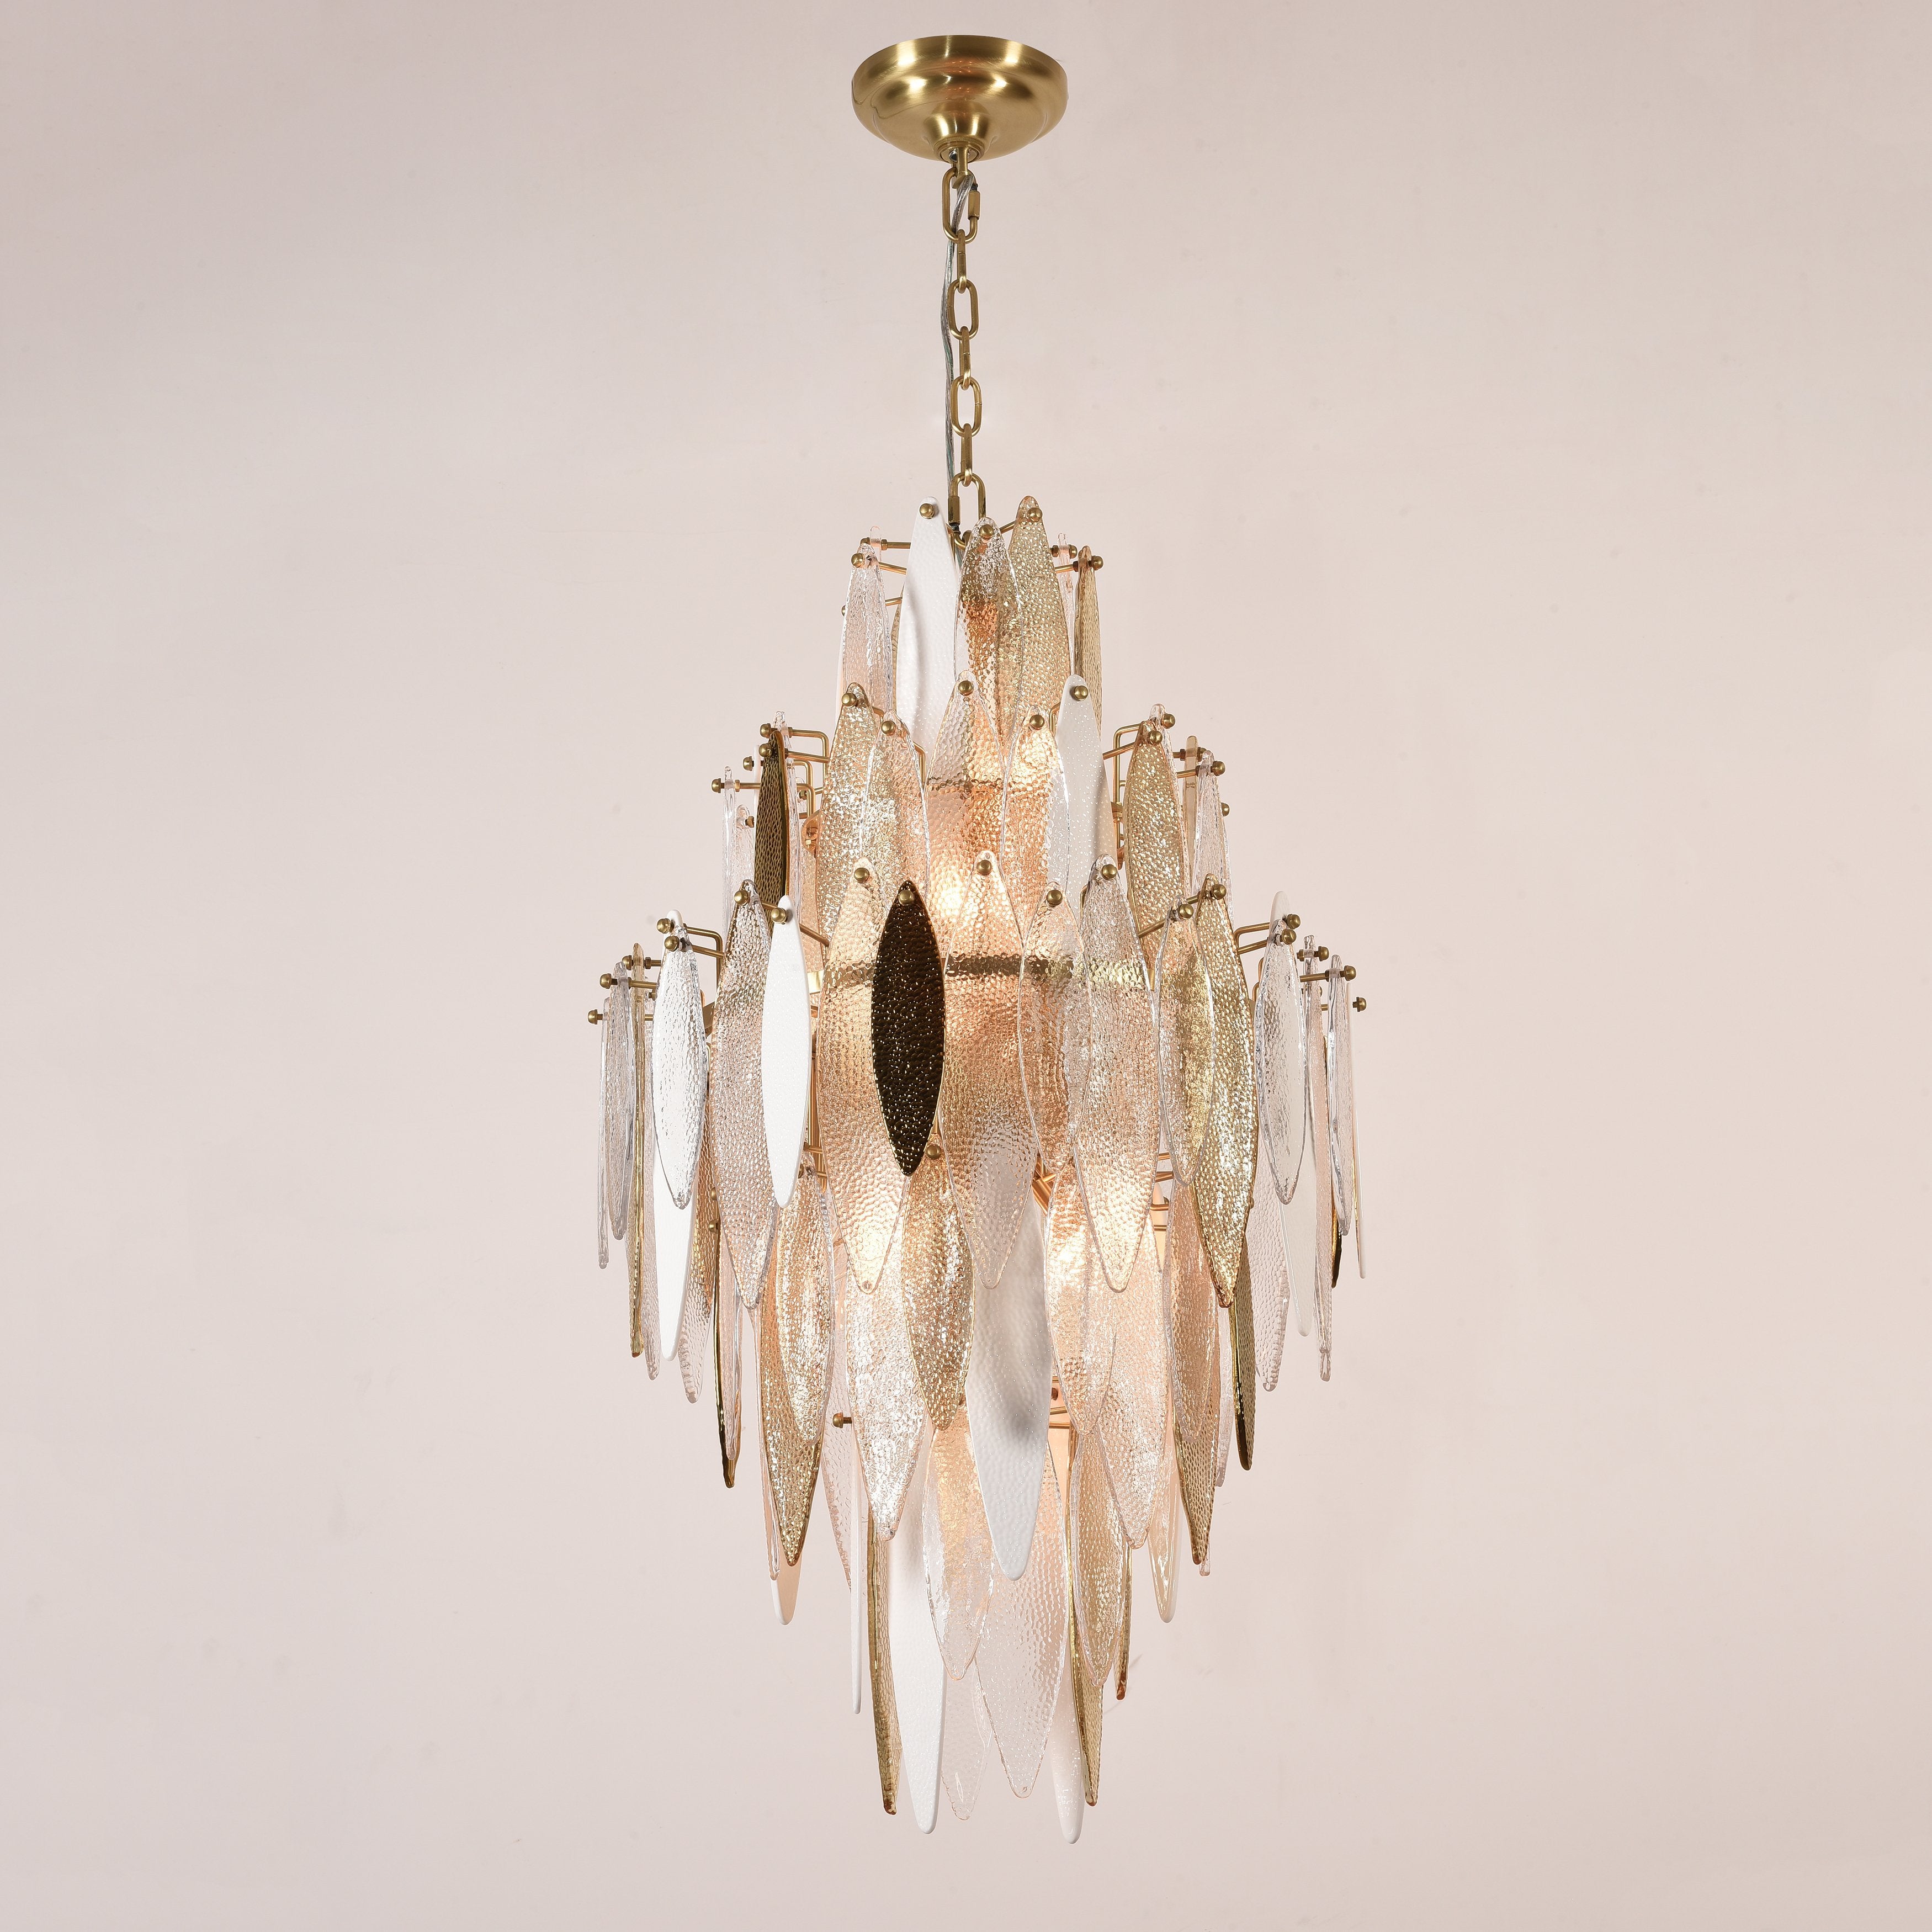 Alba Empire Tiered Oval Glass Chandelier - Italian Concept - 